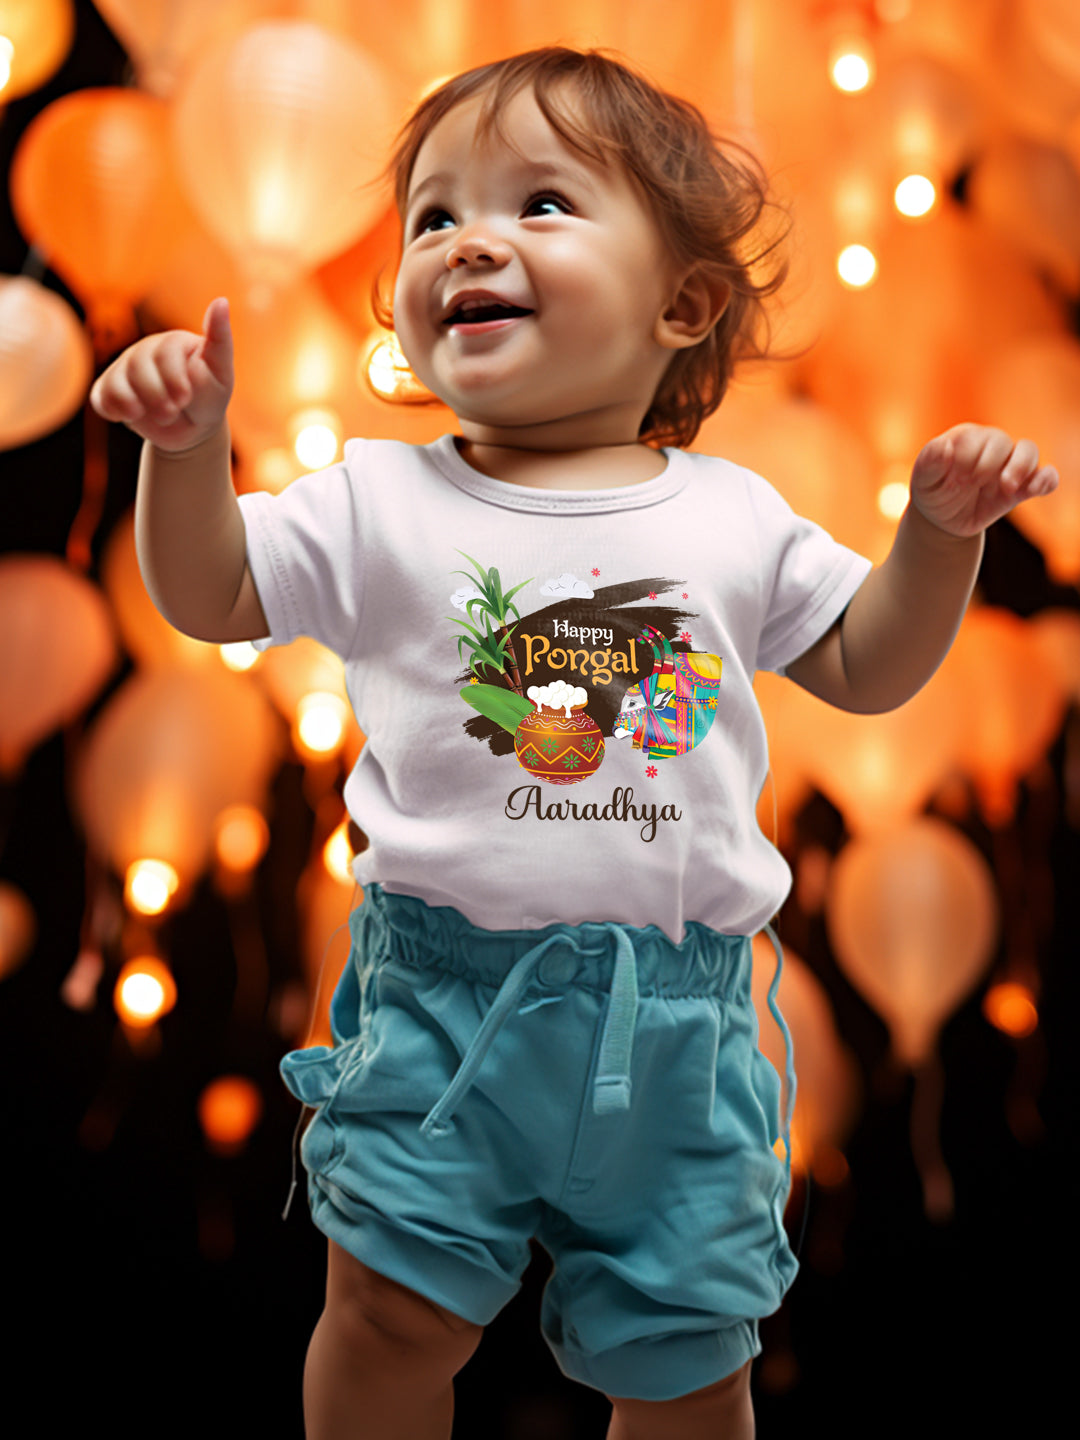 Happy pongal Mattu Kids T Shirt w/Custom Name